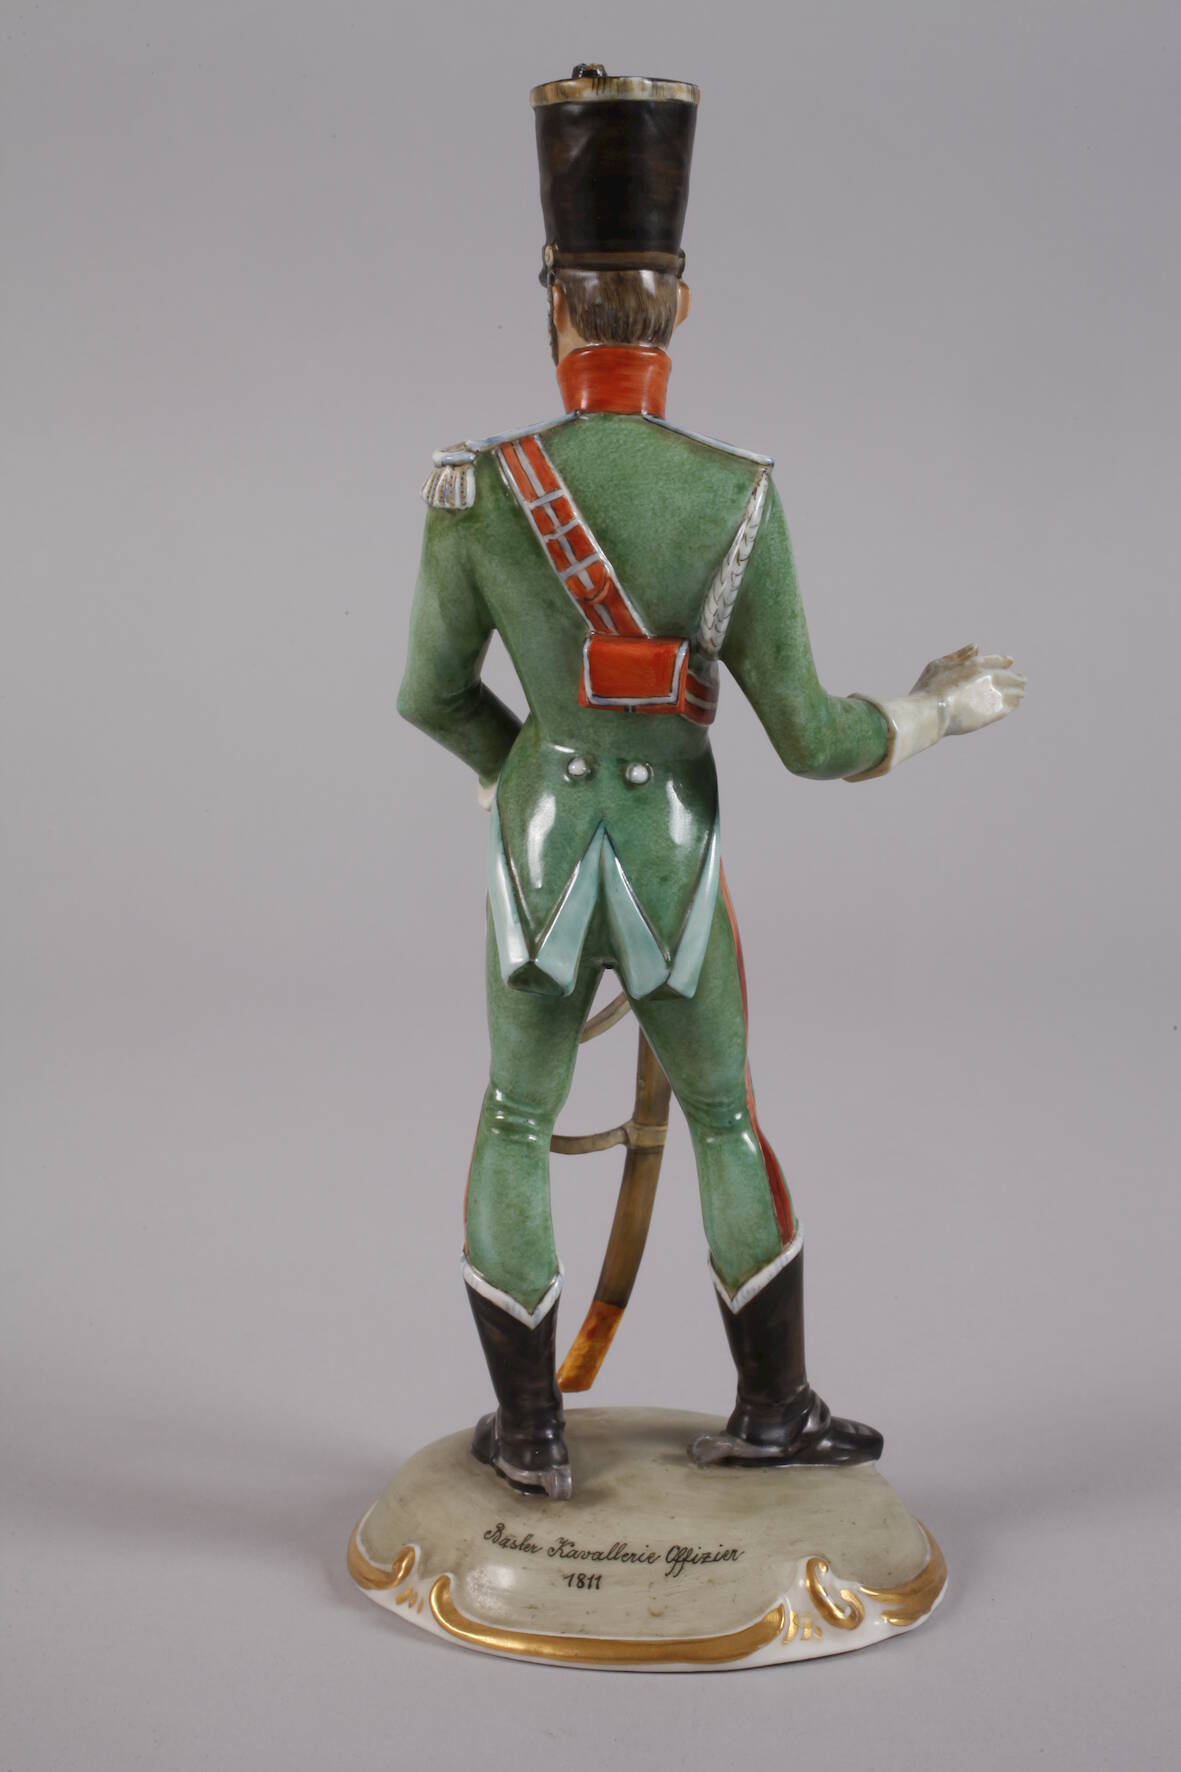 Nymphenburg "Basler Kavallerie Offizier 1811" - Image 3 of 6